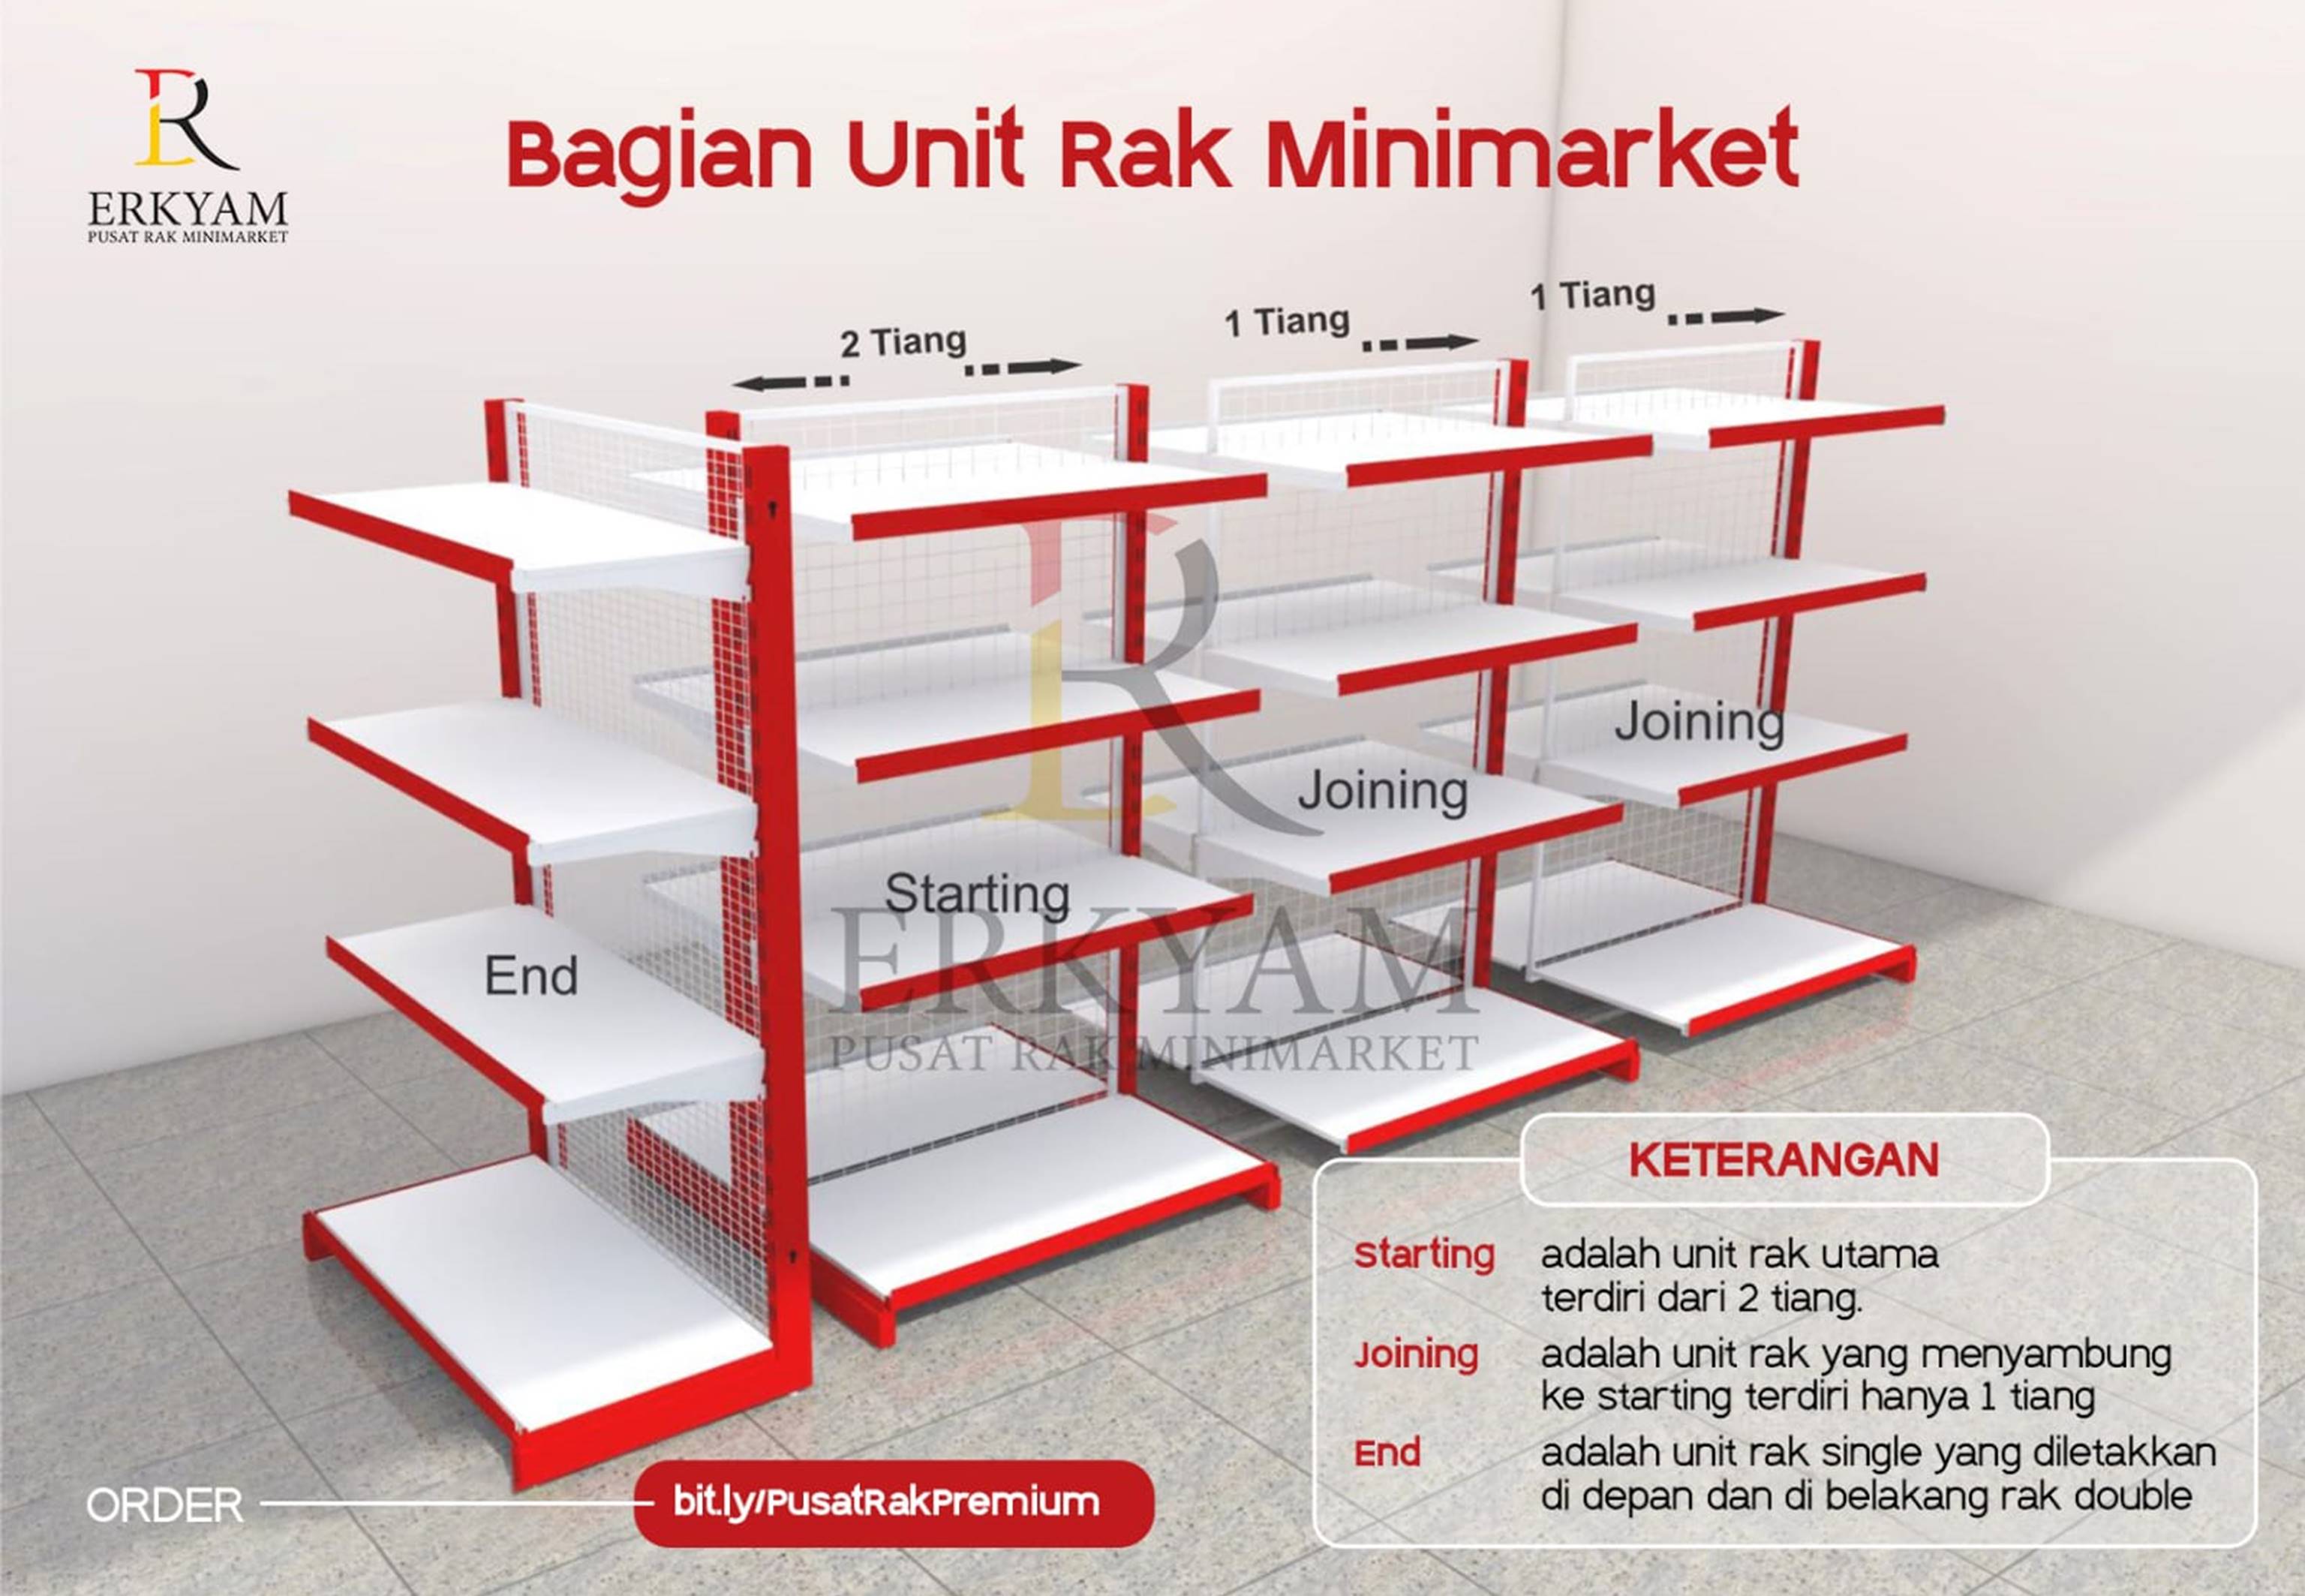 ERKYAM Distributor Rak Minimarket wilayah Pekanbaru Riau